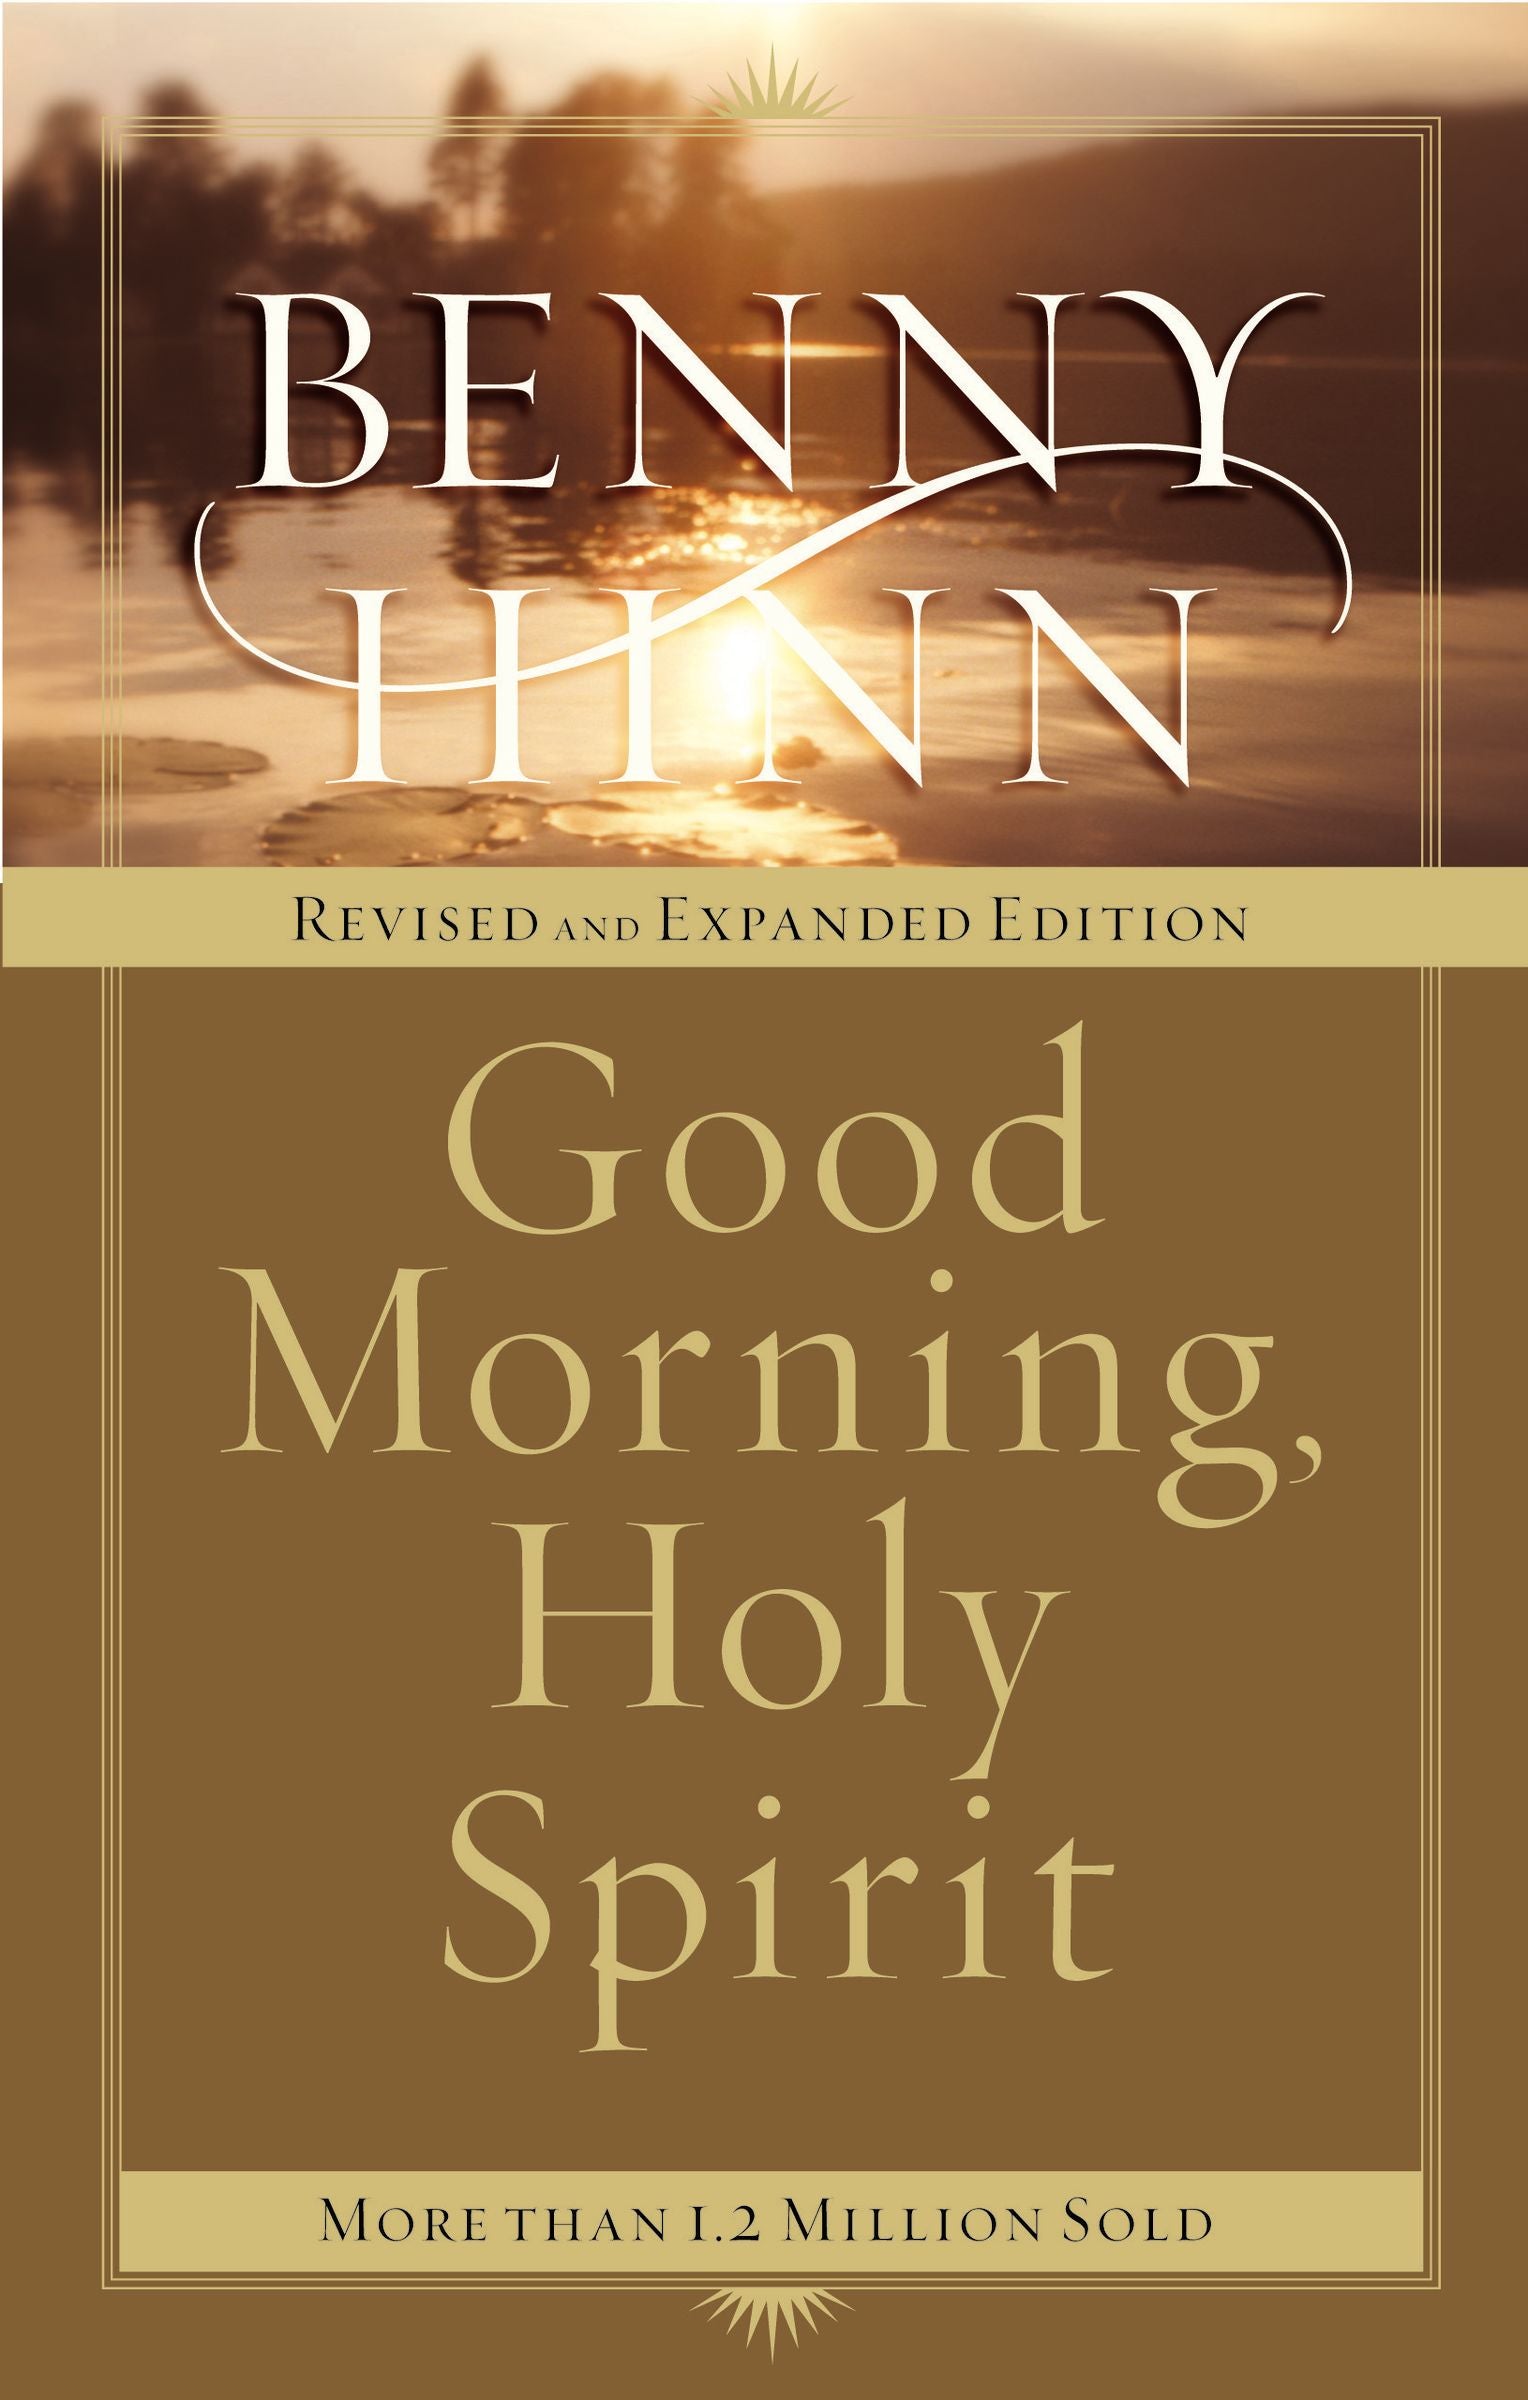 Image of Good Morning, Holy Spirit other